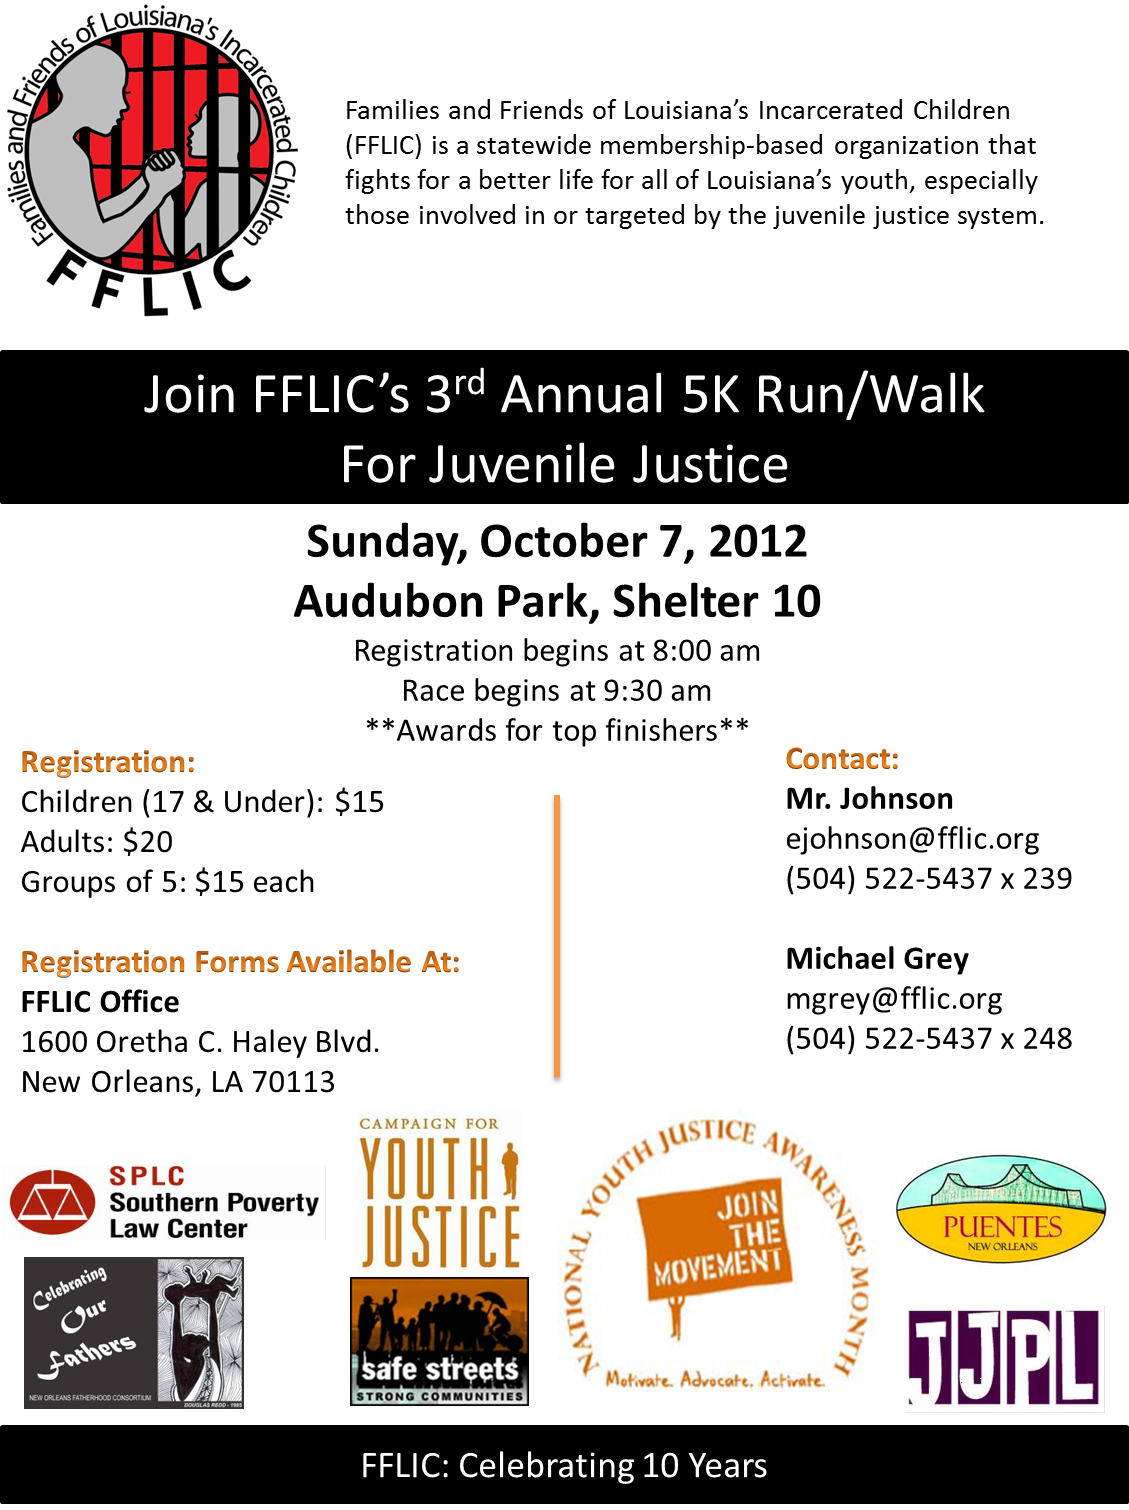 FFLIC’s 3rd Annual 5K Run/Walk for Juvenile Justice